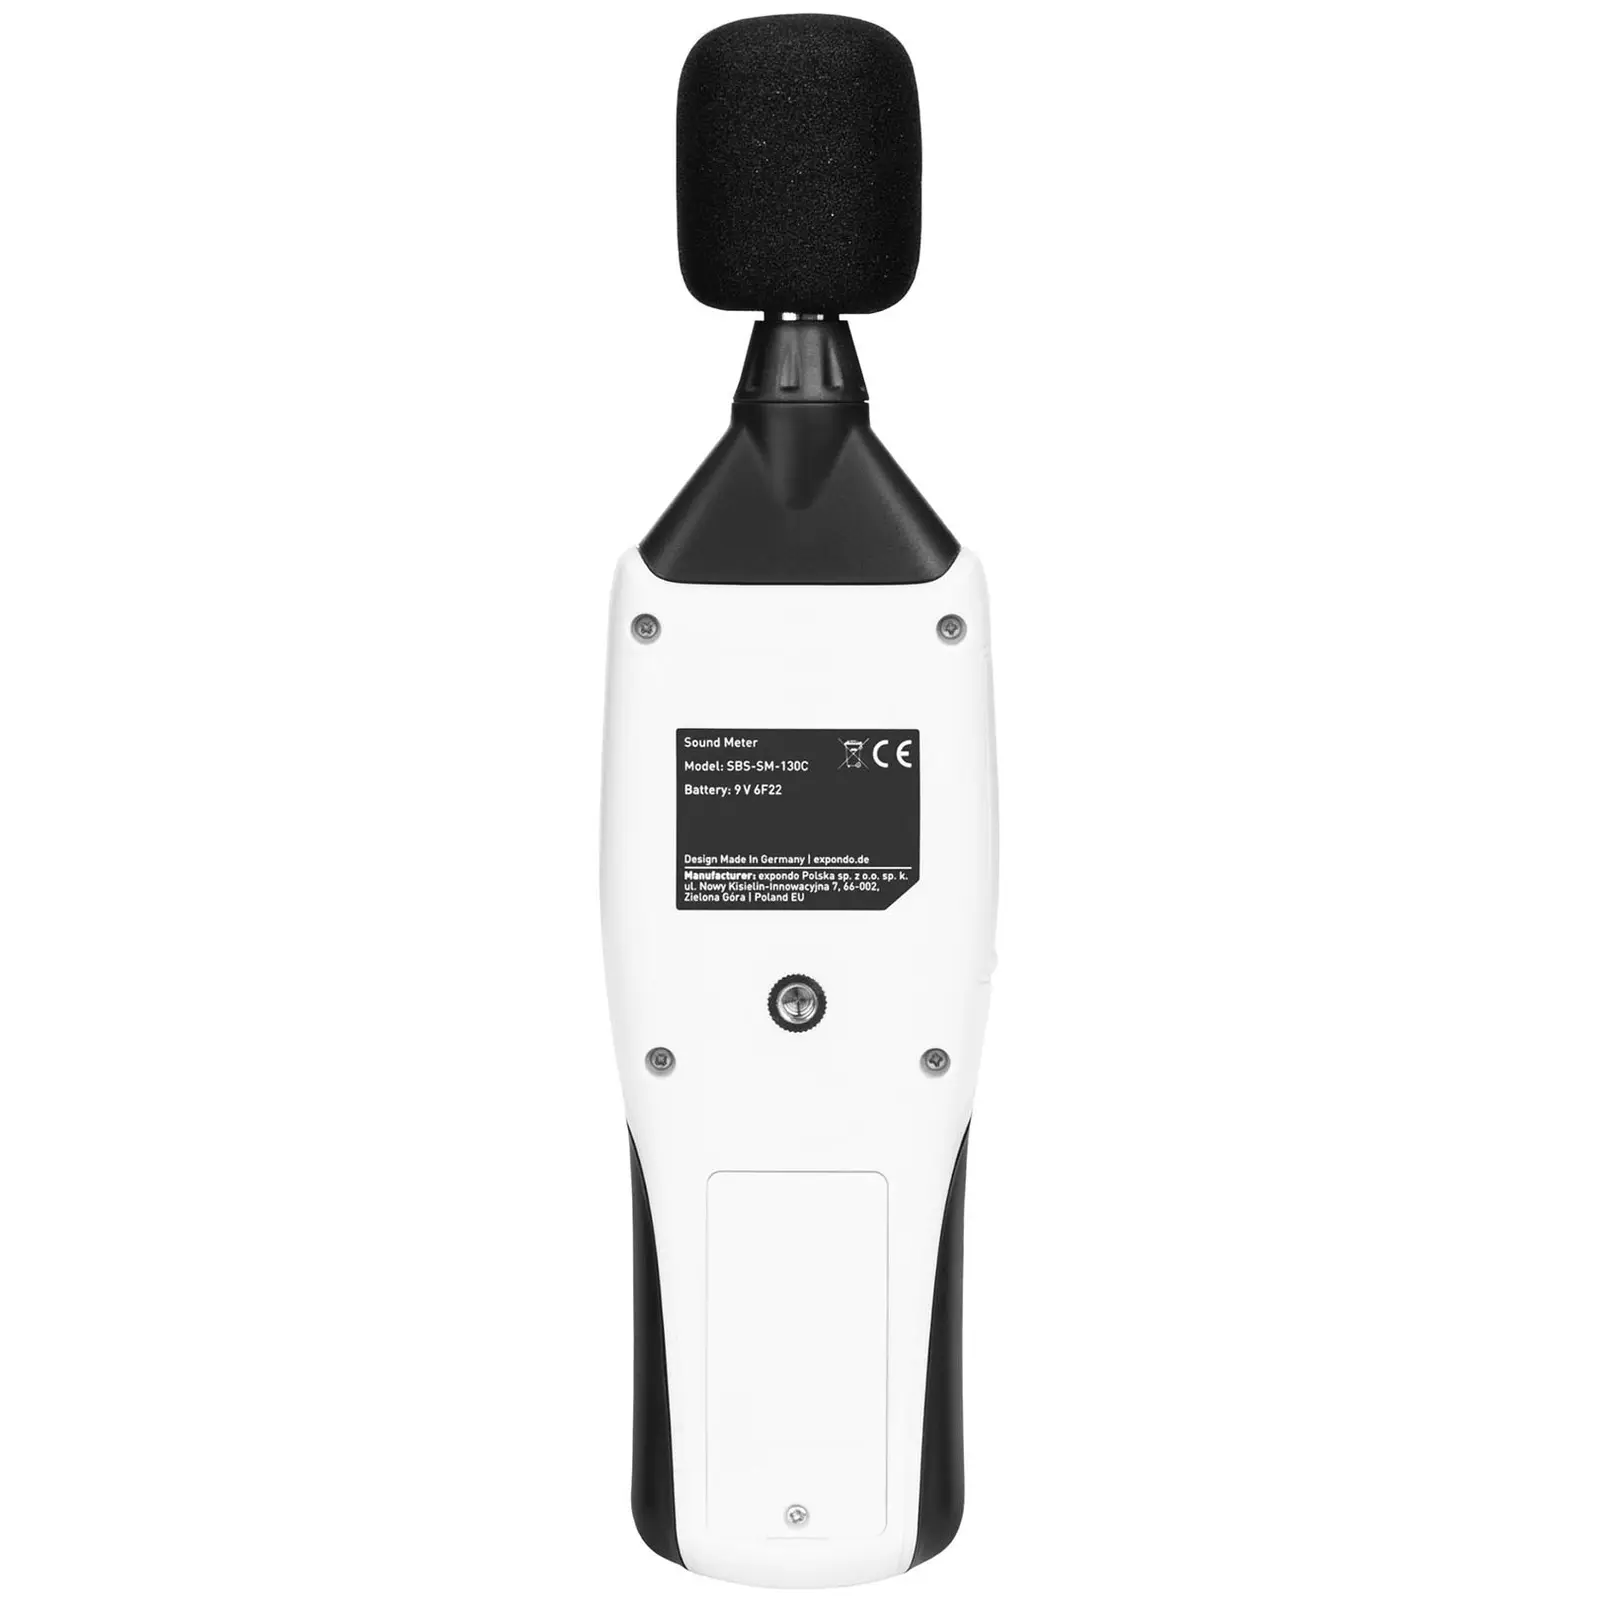 Sound Meter - class 2 - 30-130 dB